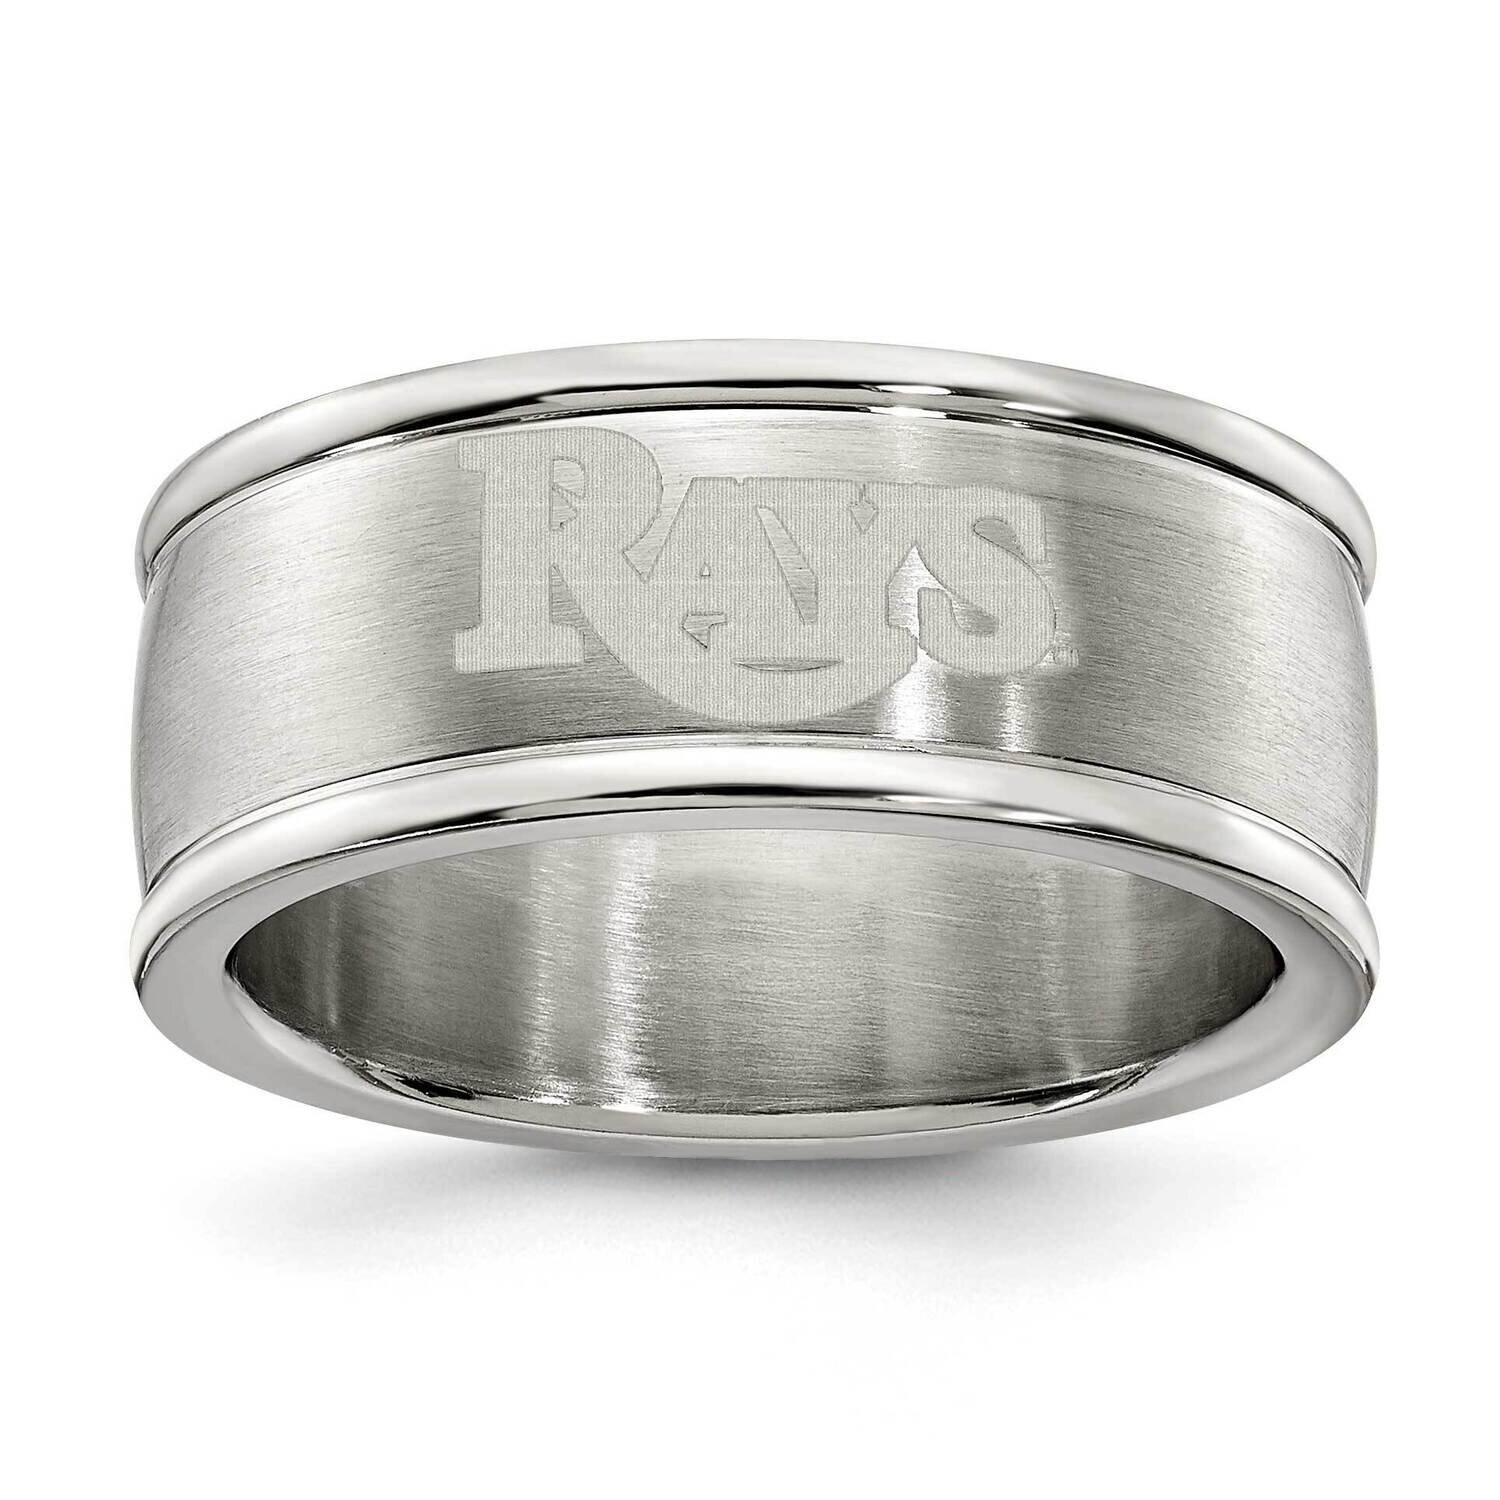 Tampa Bay Rays Logo Band Ring Stainless Steel DEV035-SZ6